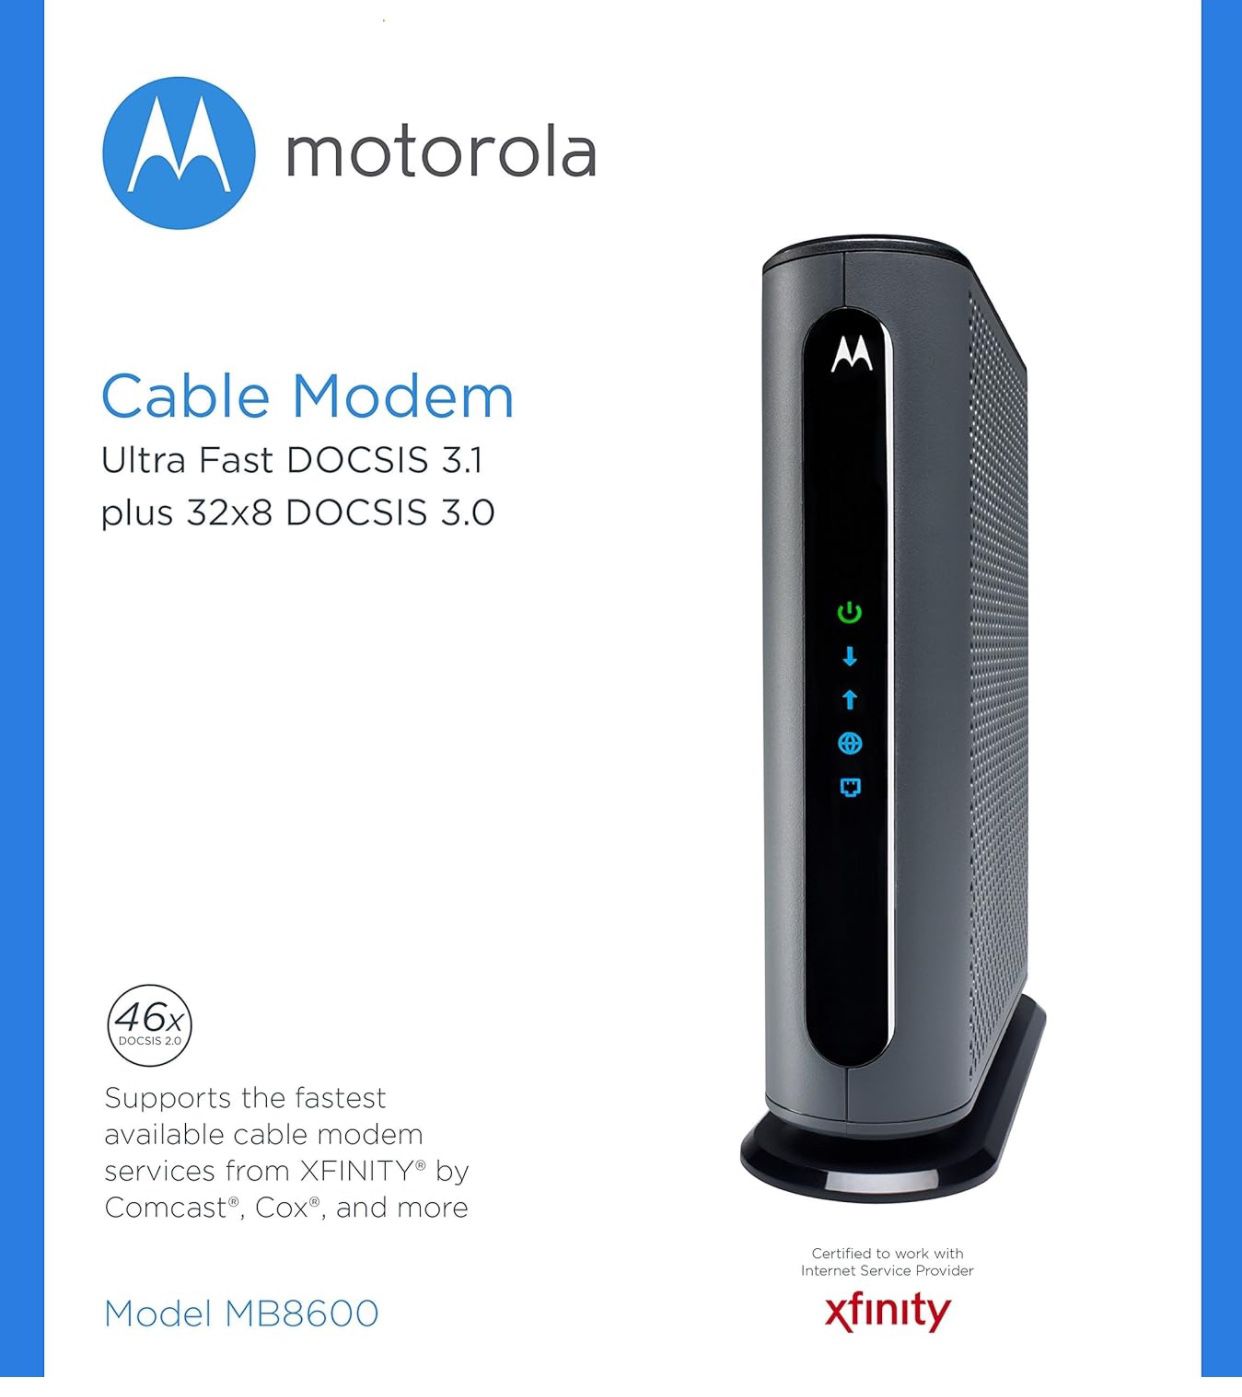 Motorola DOCSIS 3.1 Cable Modem MB8600